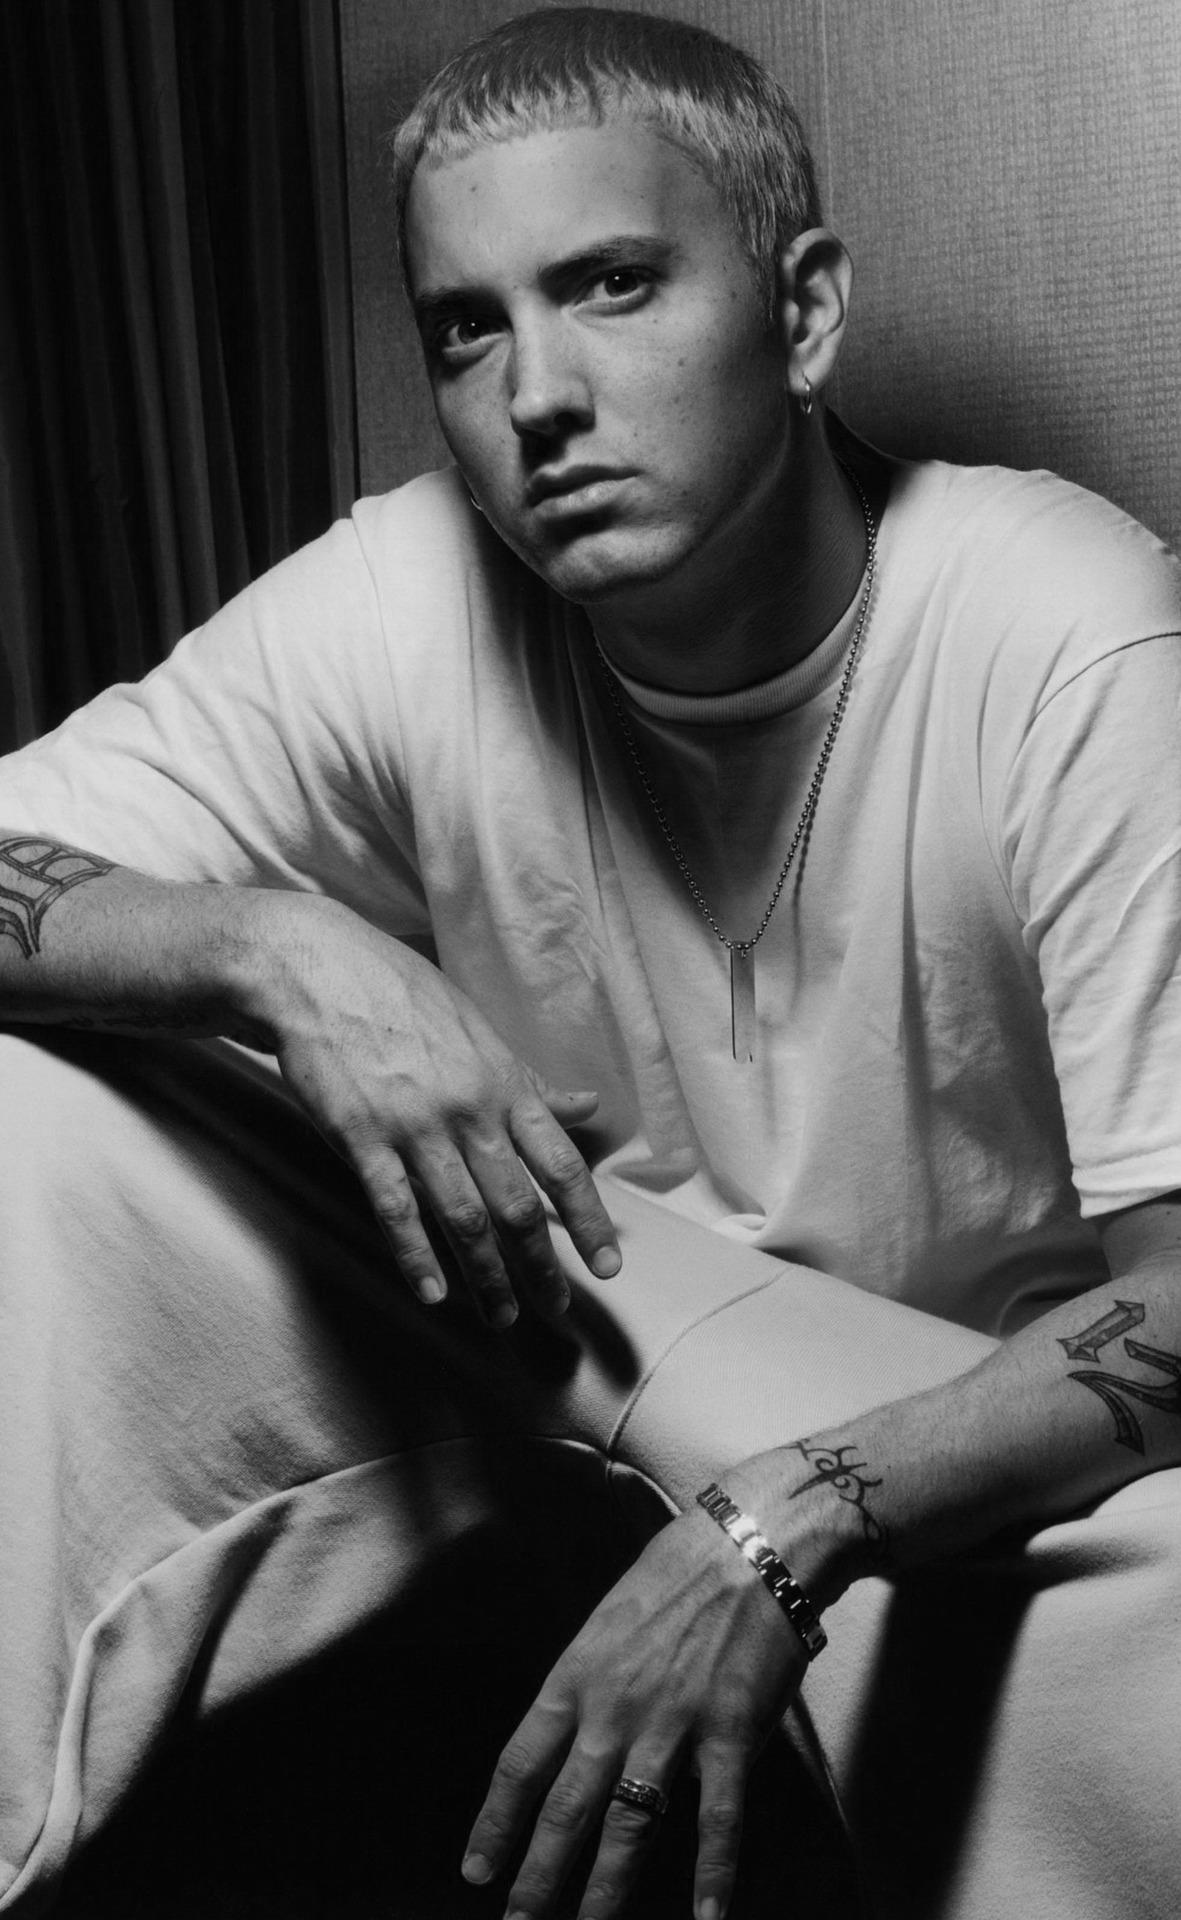 Download Wallpaperfree: Eminem Wallpaper